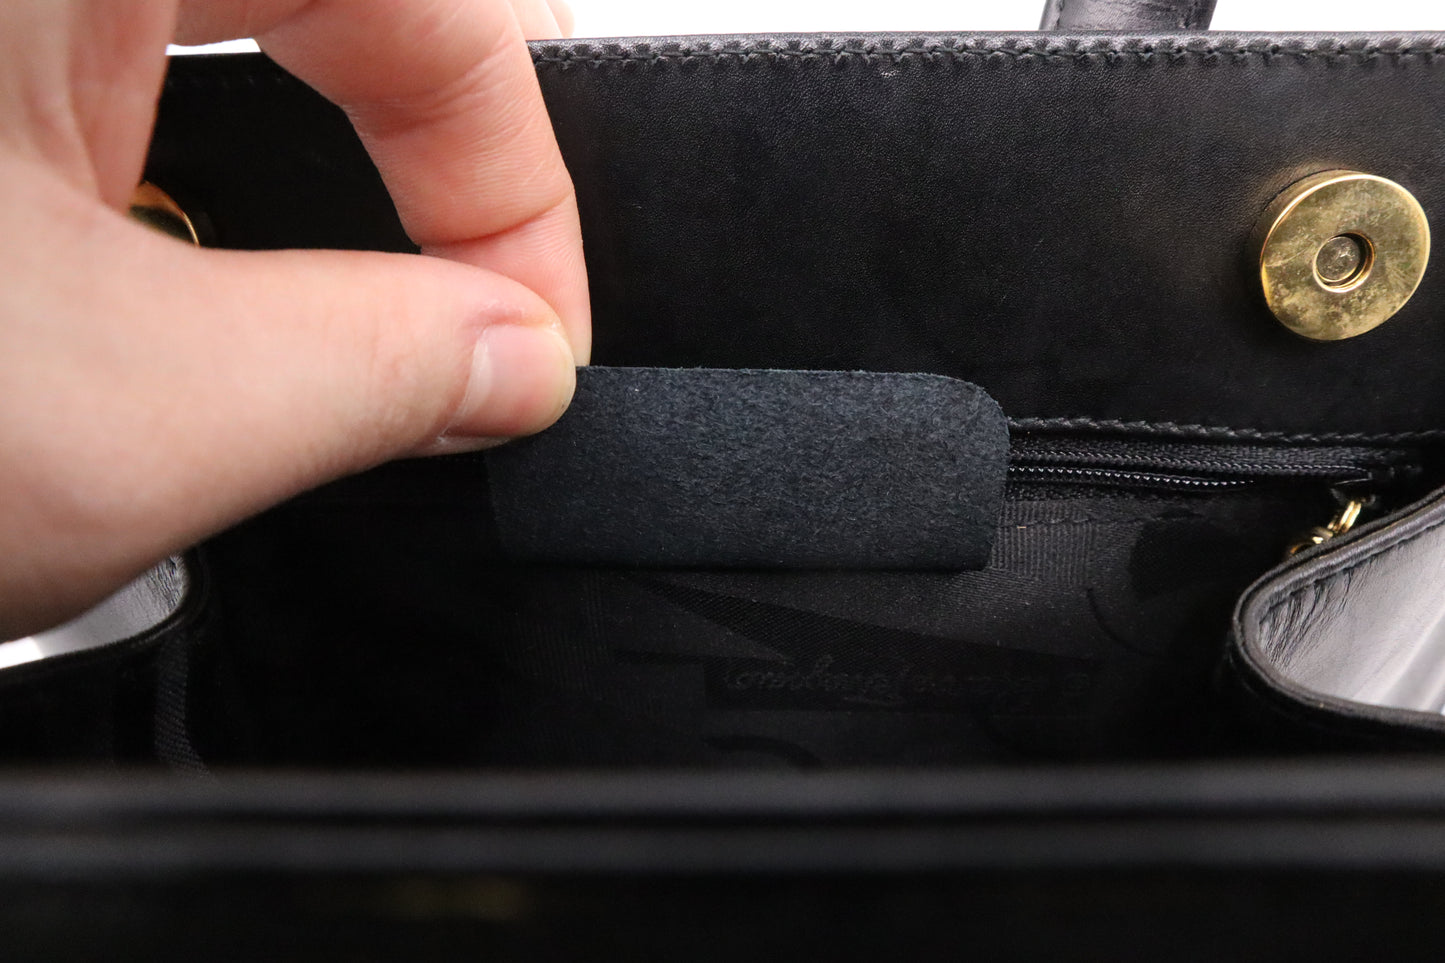 Ferragamo Handbag in Black Leather